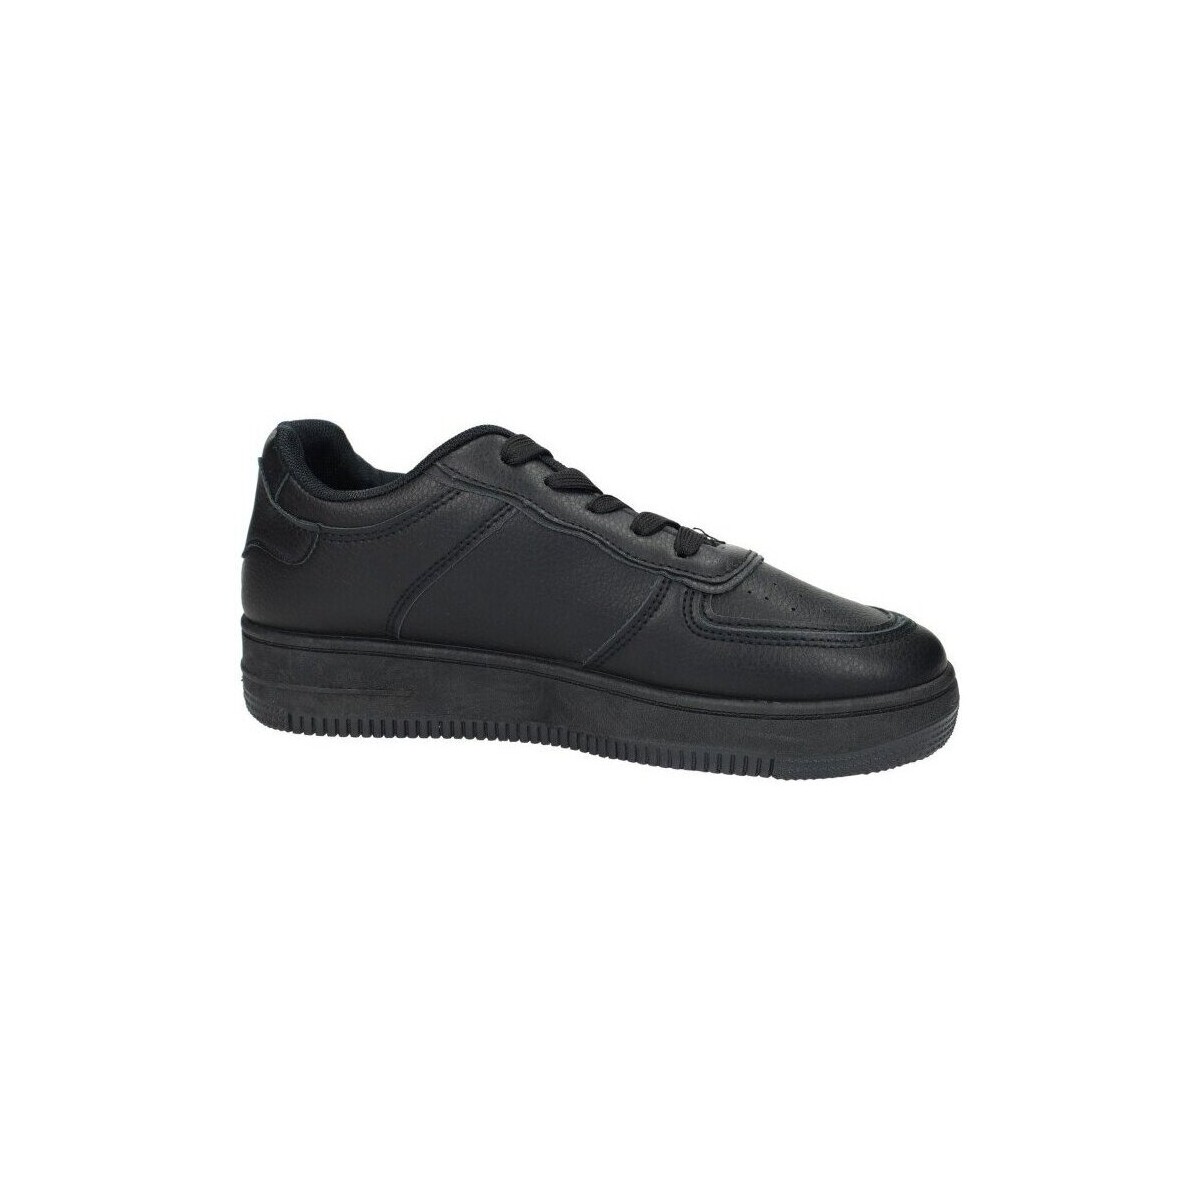 Schoenen Dames Lage sneakers Zapatop  Zwart